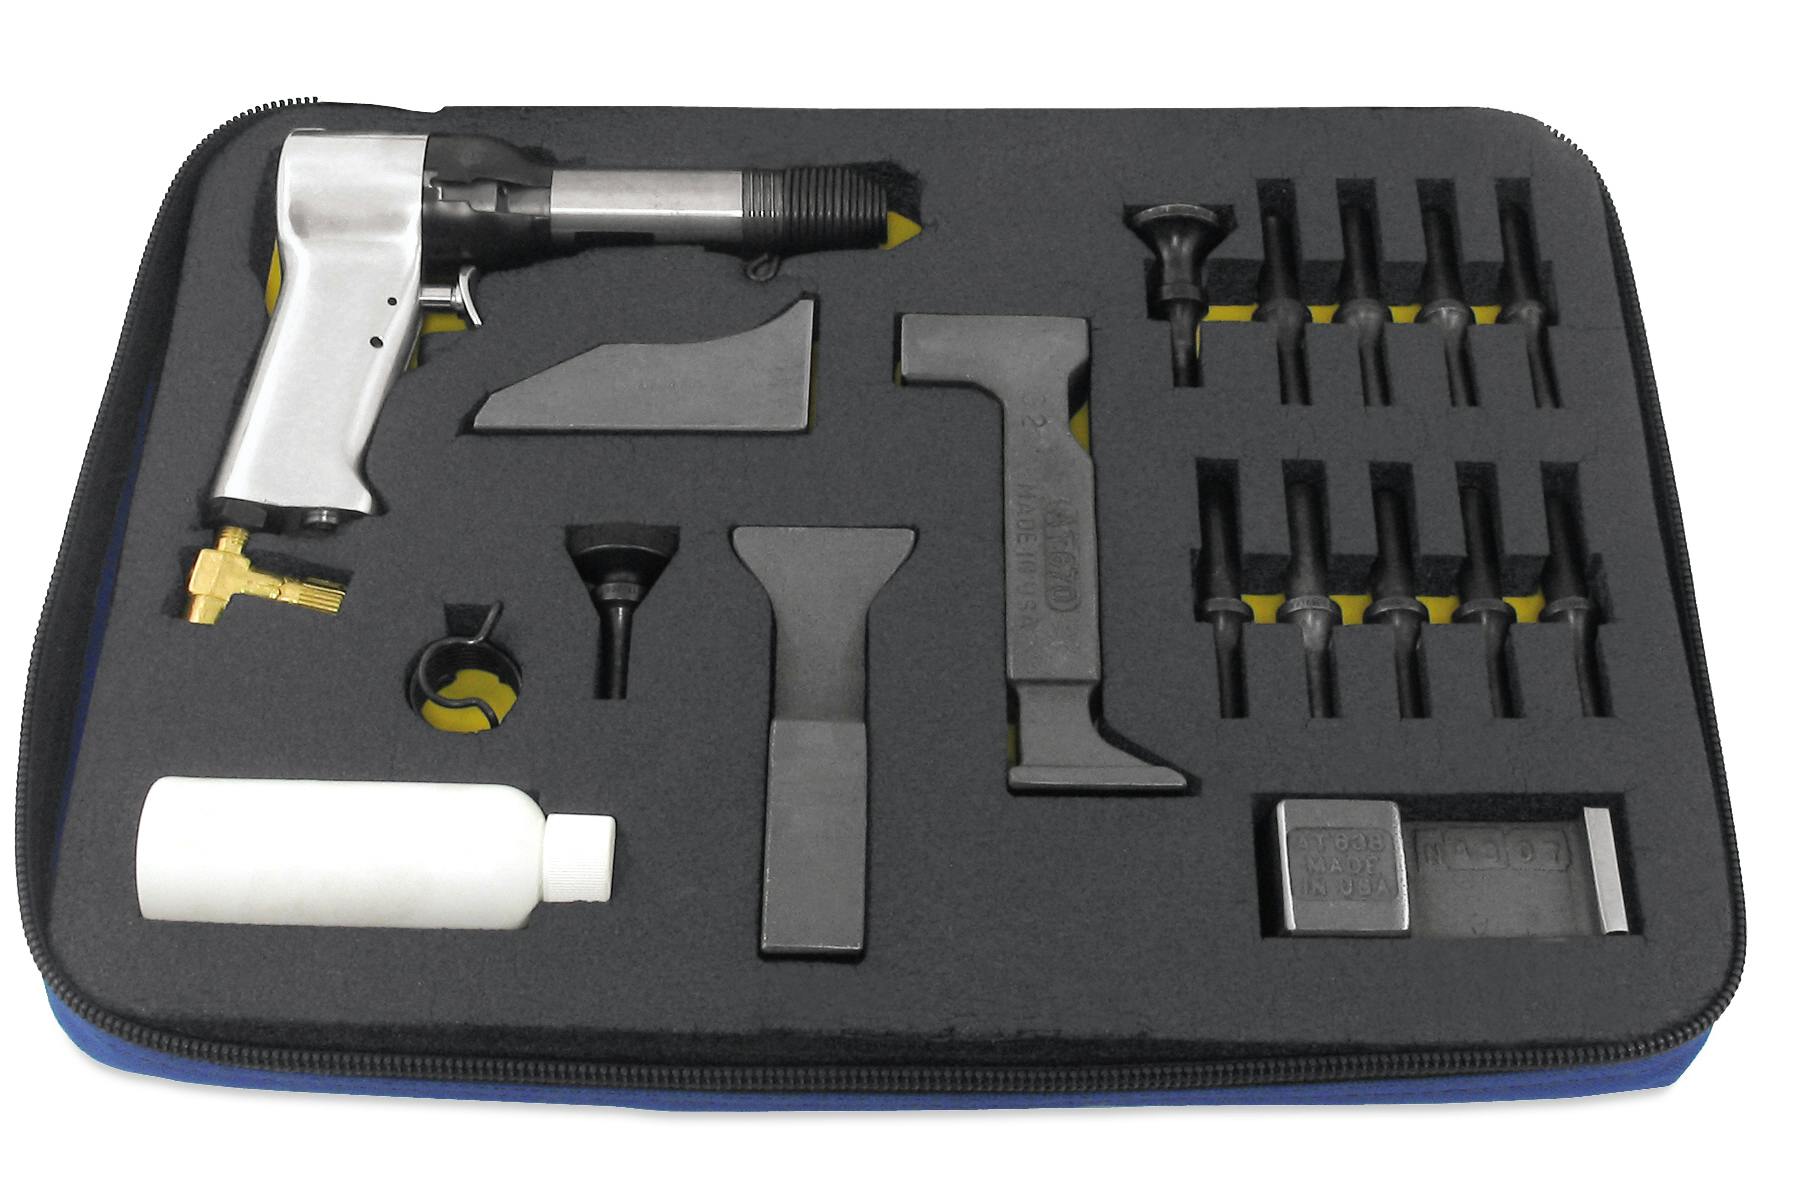 15 Piece Riveting Kit with SIOUX 4X Rivet Gun